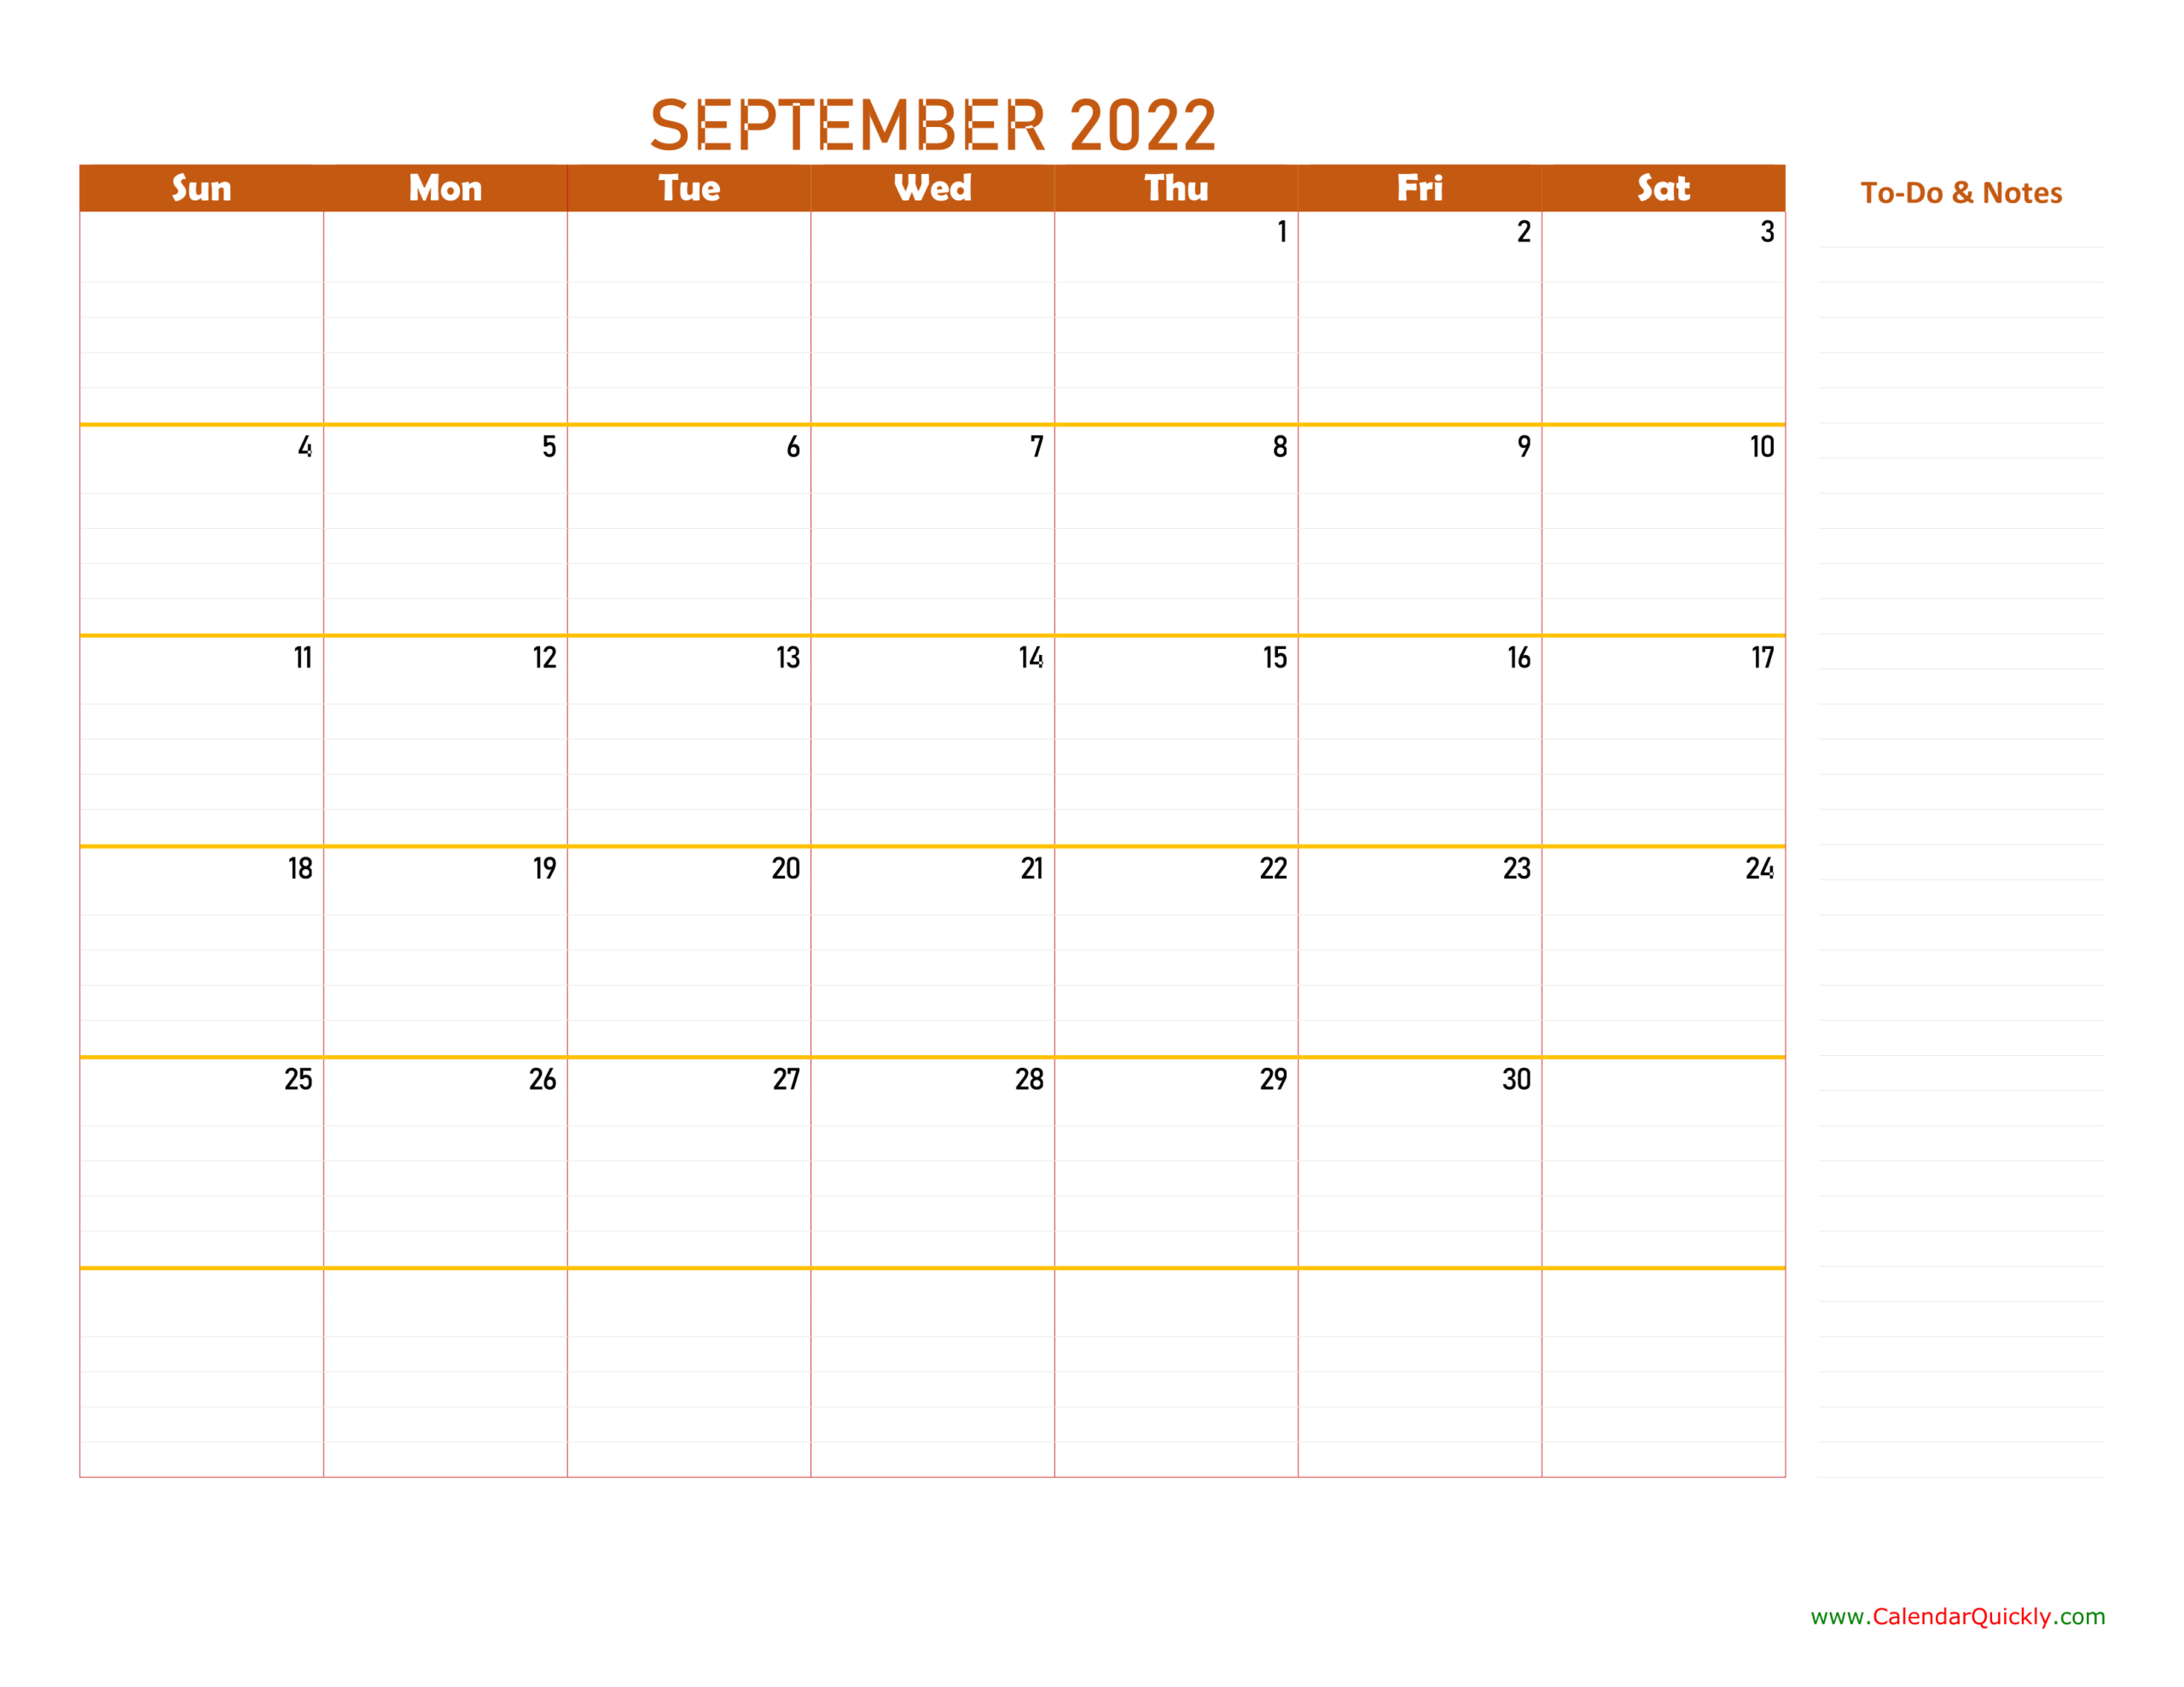 September 2022 Calendar | Calendar Quickly